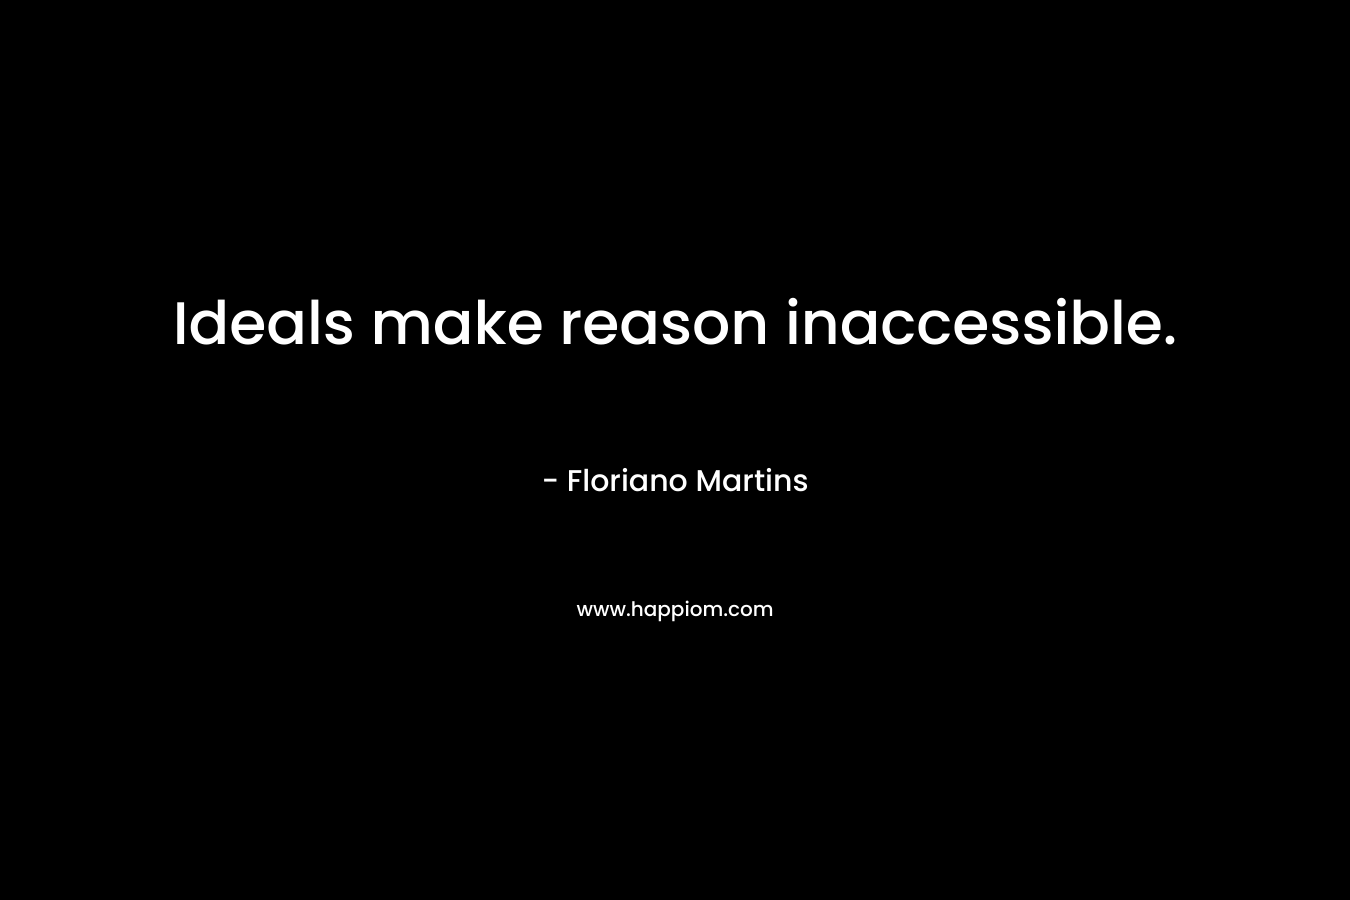 Ideals make reason inaccessible. – Floriano Martins